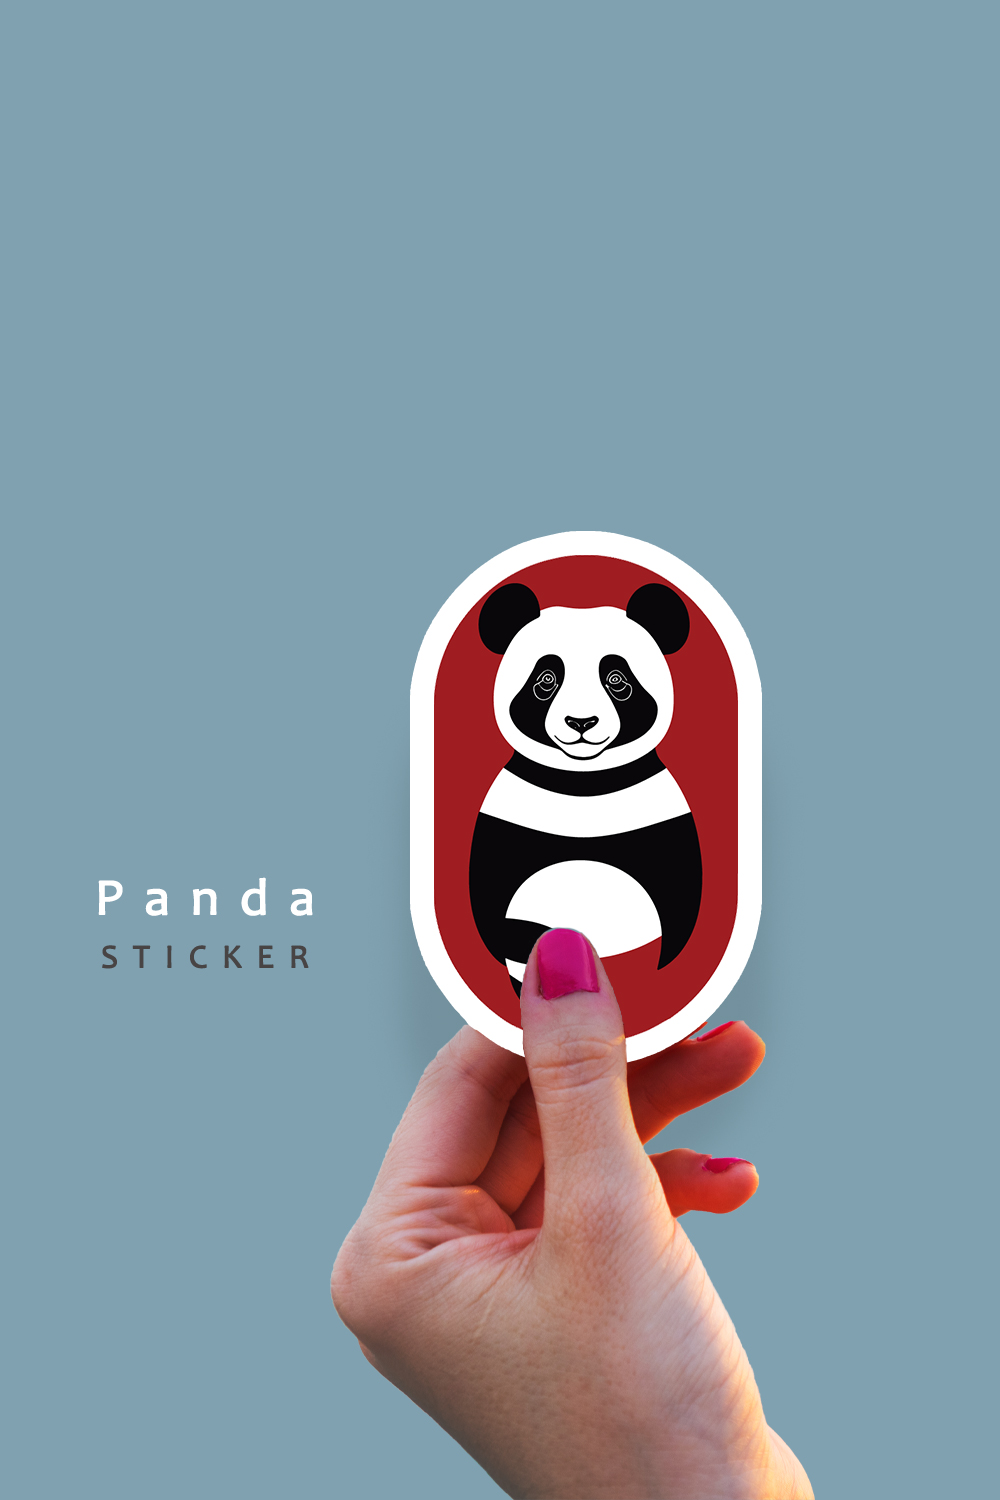 cutw panda sticker holding pinterest preview image.